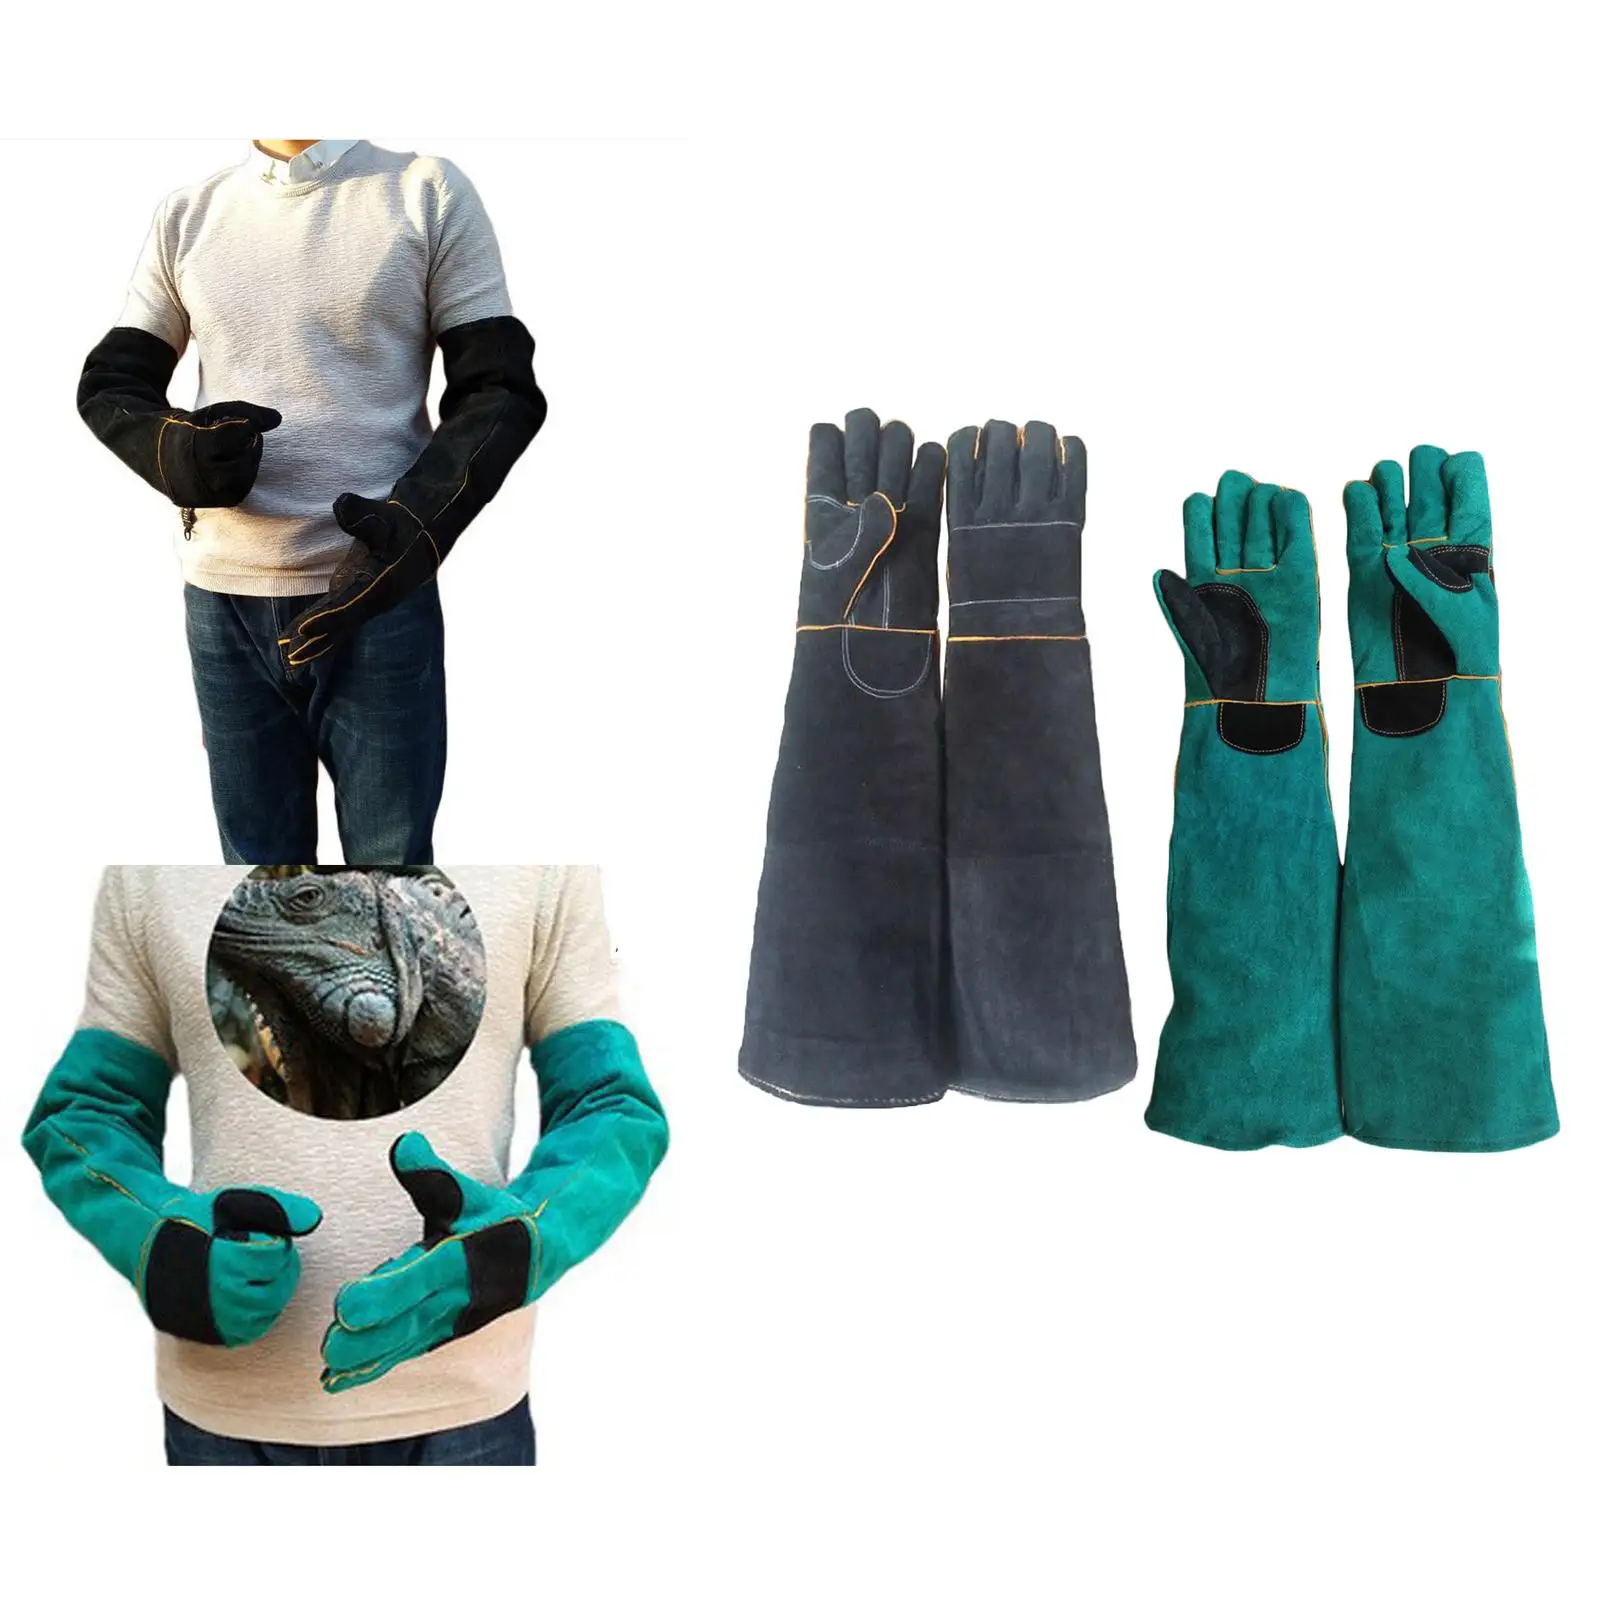 Animal  Gloves  Thickened Cowhide for Welding, Gardening, Handling